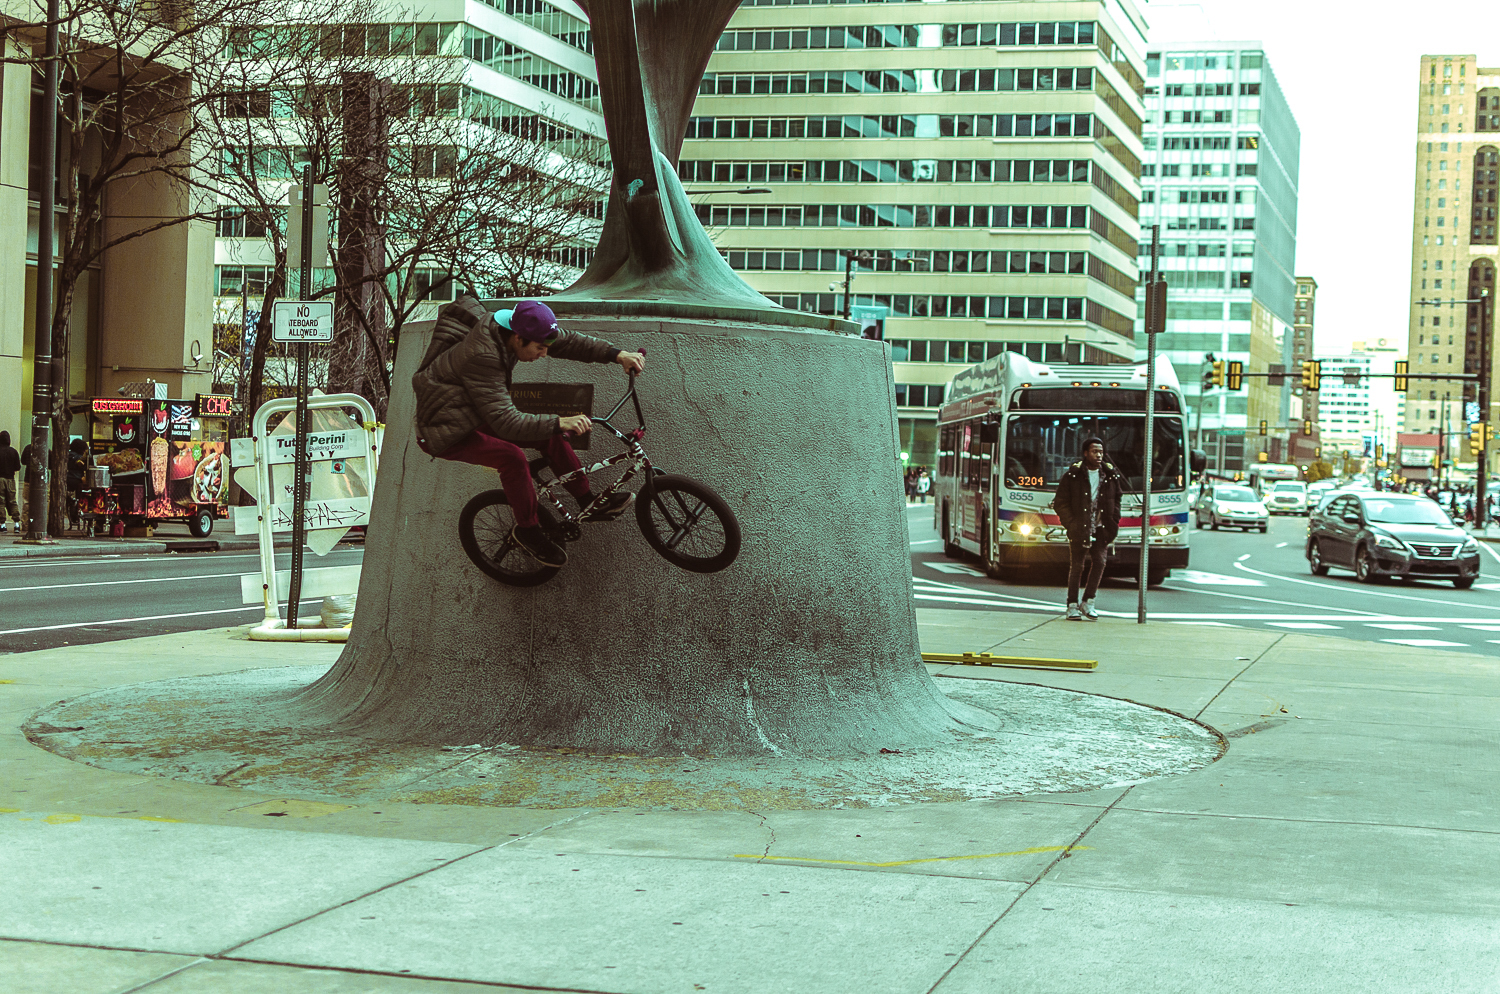 Scaling city monuments via bike outside City Hall